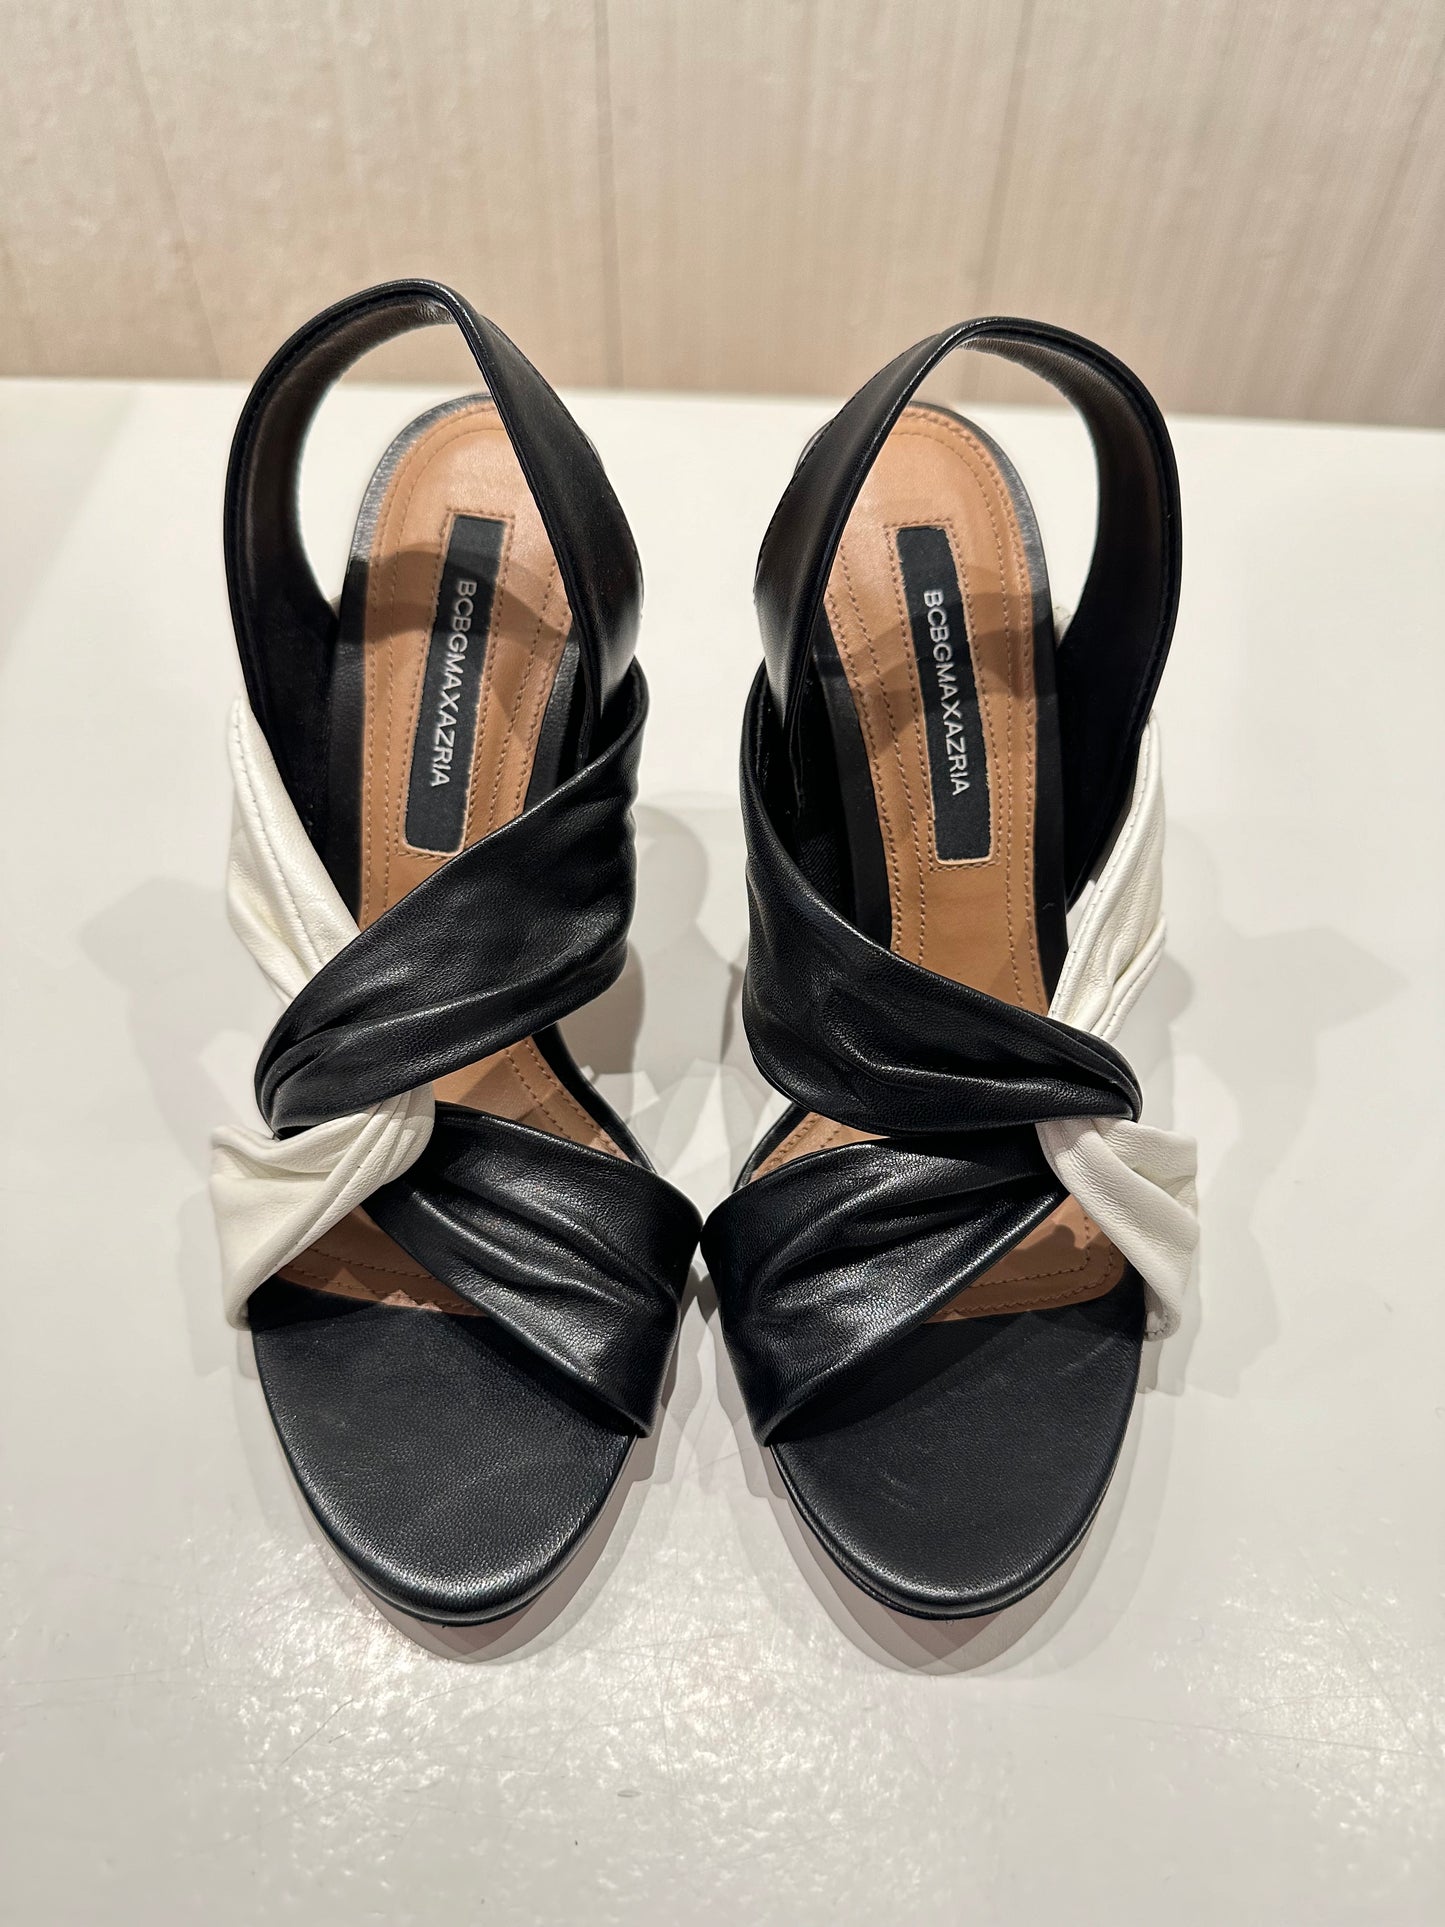 Talia soft nappa black and white heel